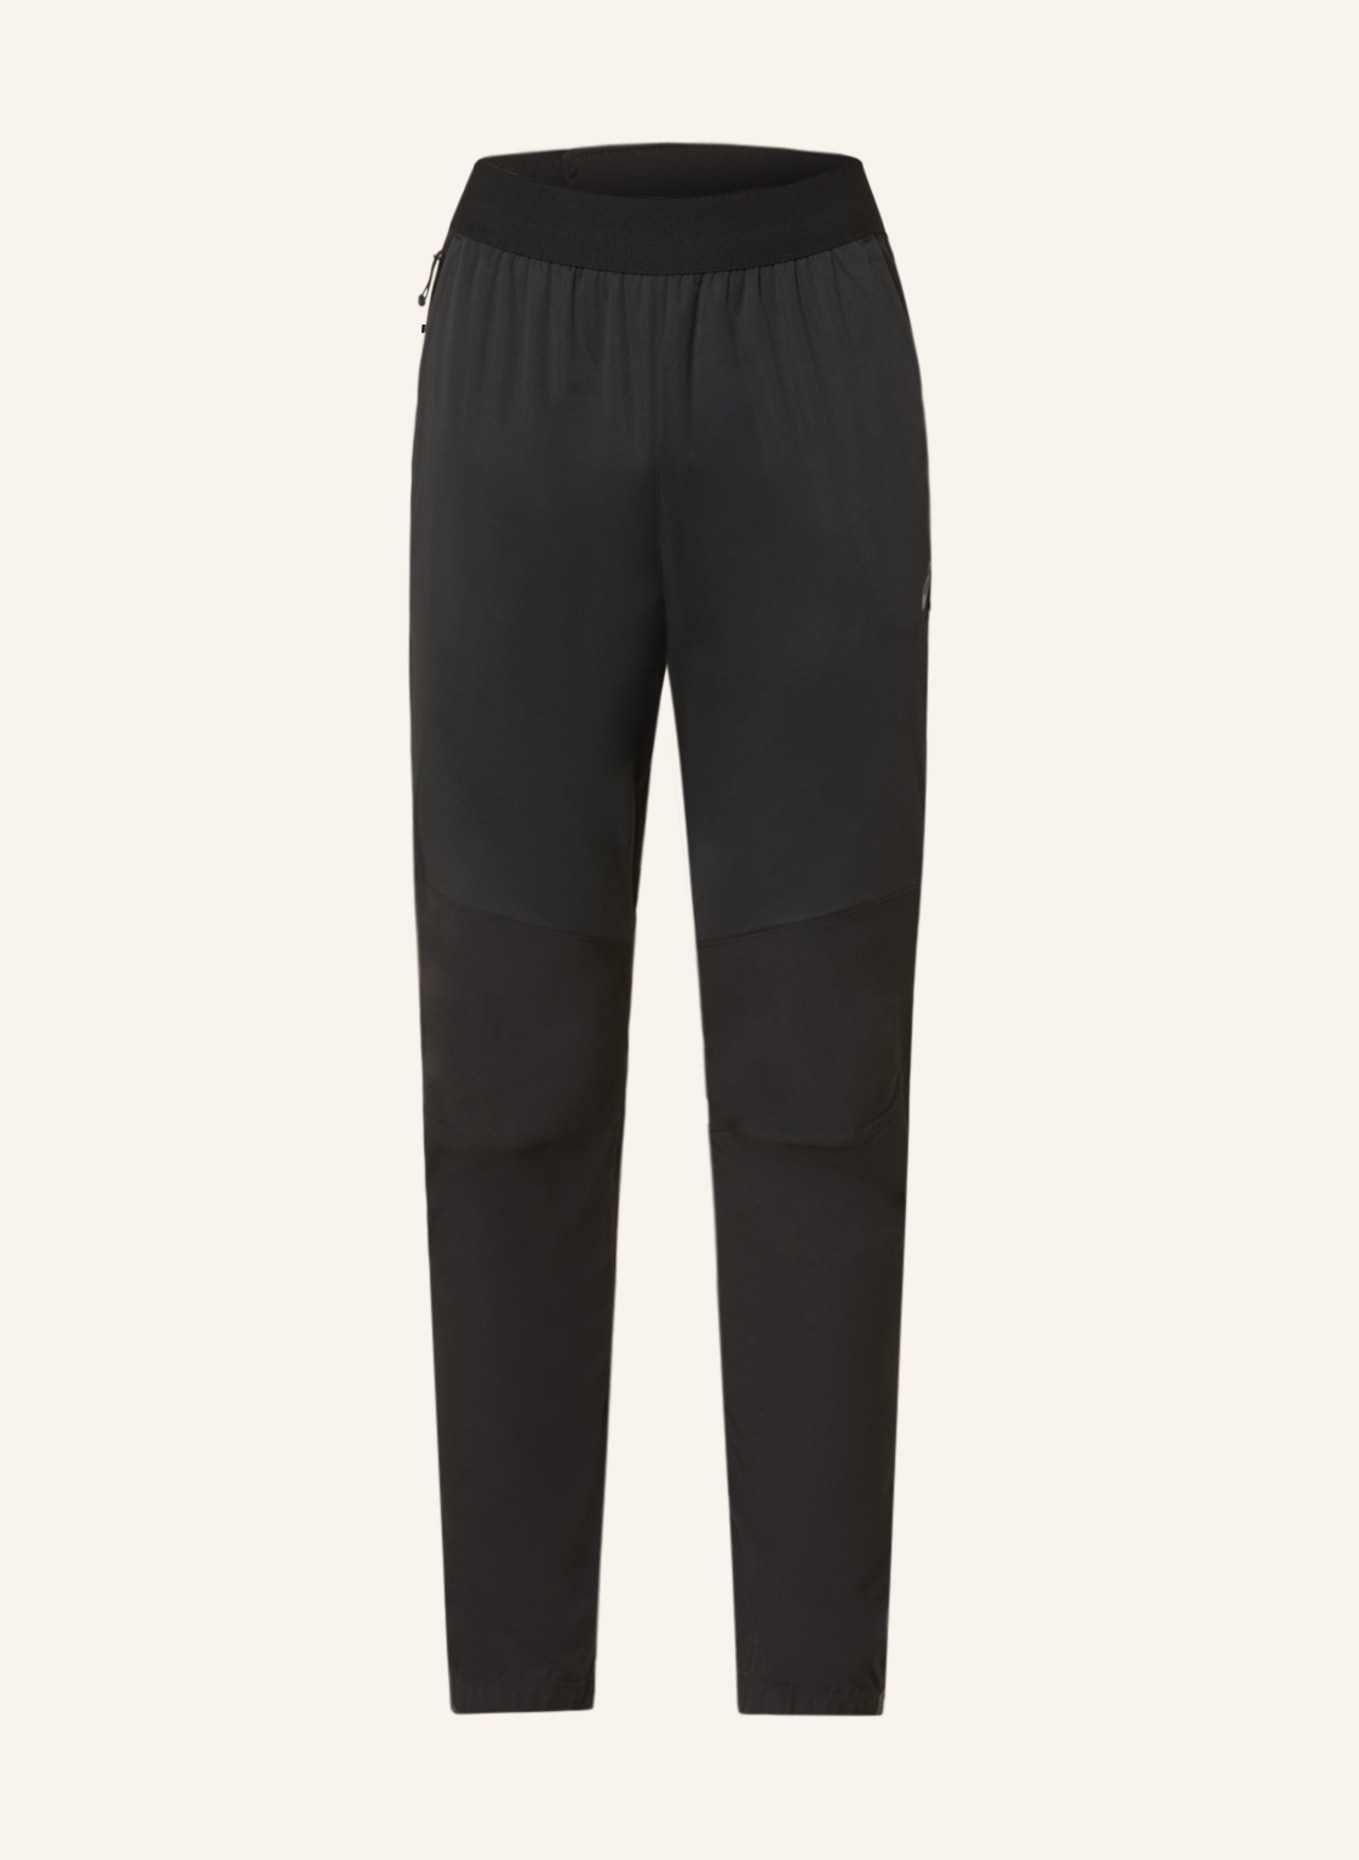 Buy Men Black Solid Regular Fit Polyester Track Pant From Fancode Shop.